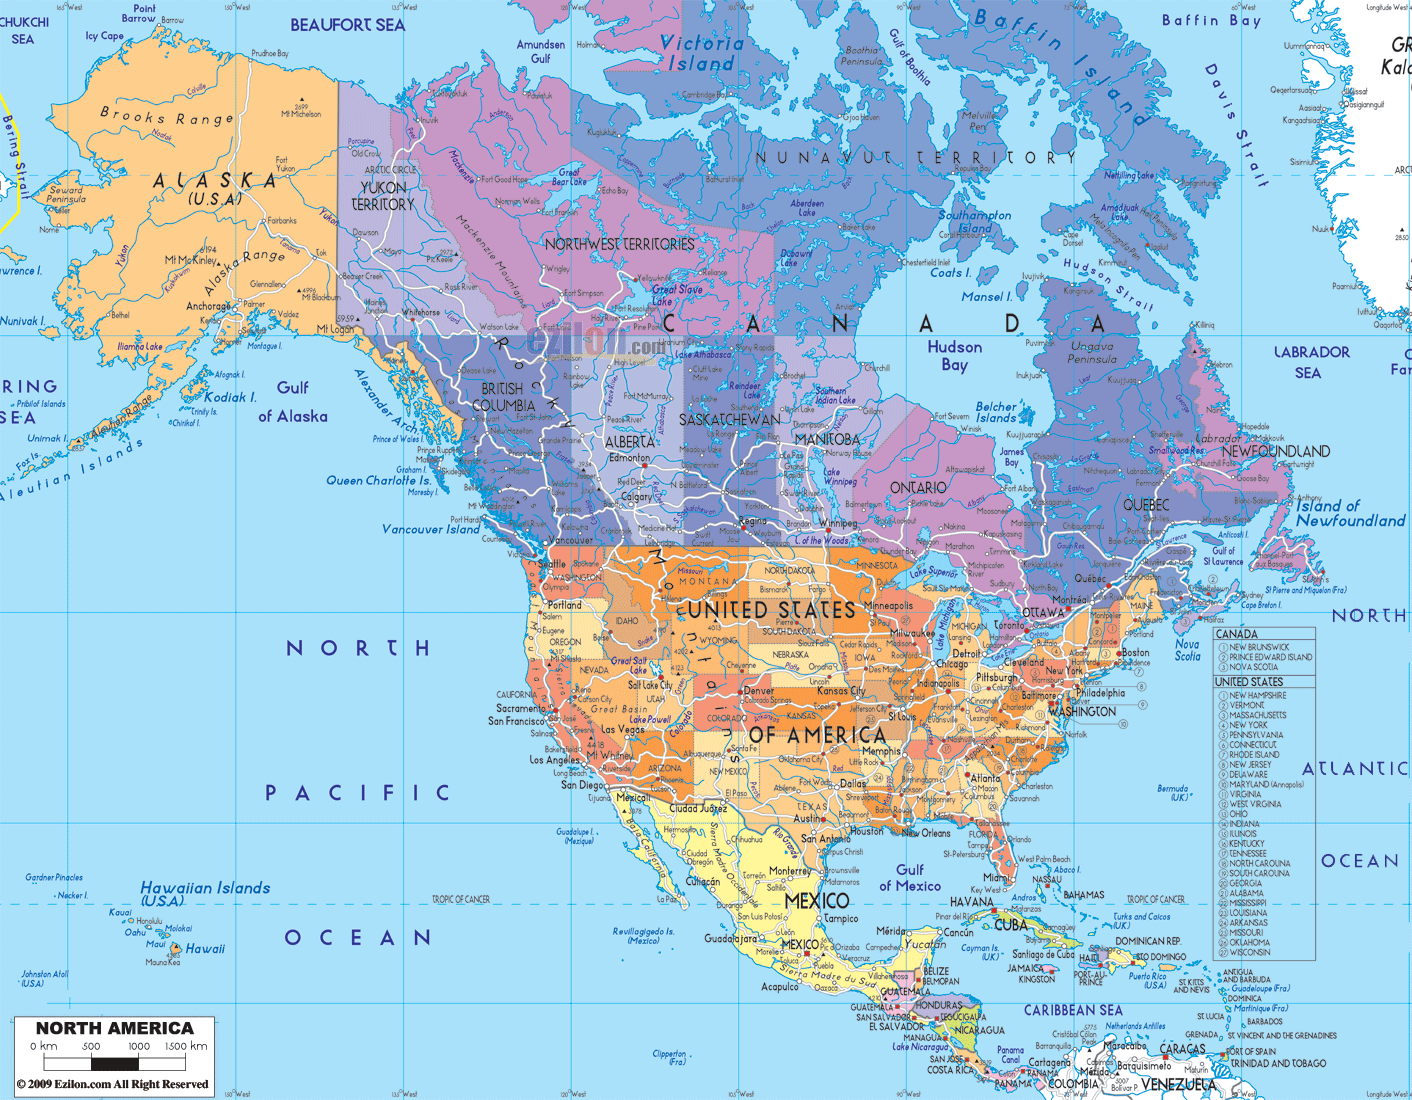 North America Map Region City | Map of World Region City